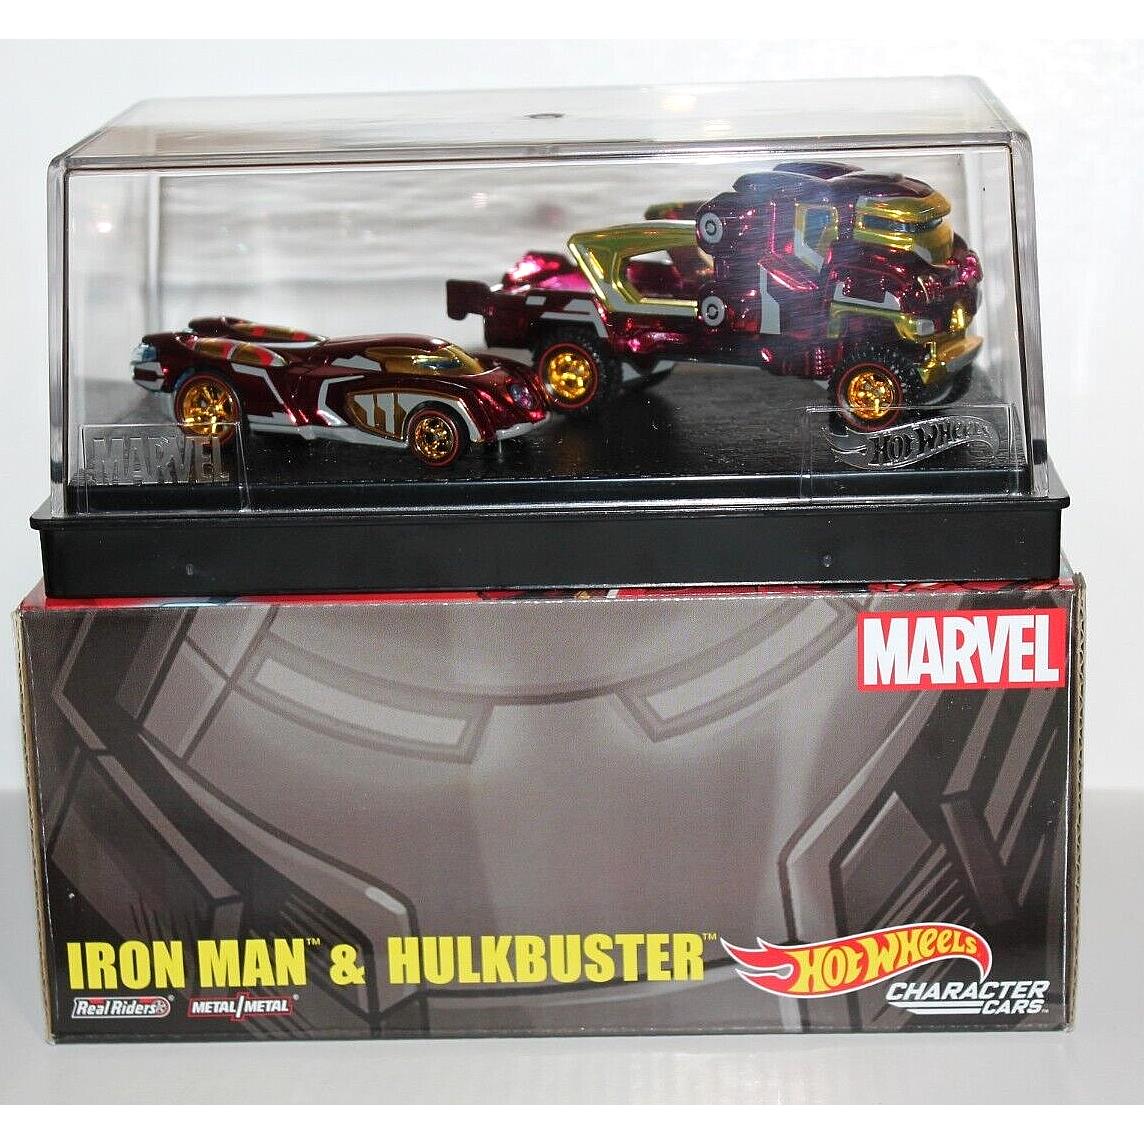 Hot Iron Man & Hulkbuster Wheels Rlc Character Cars Iron Man Hulkbuster 0785 / 4000 Nip